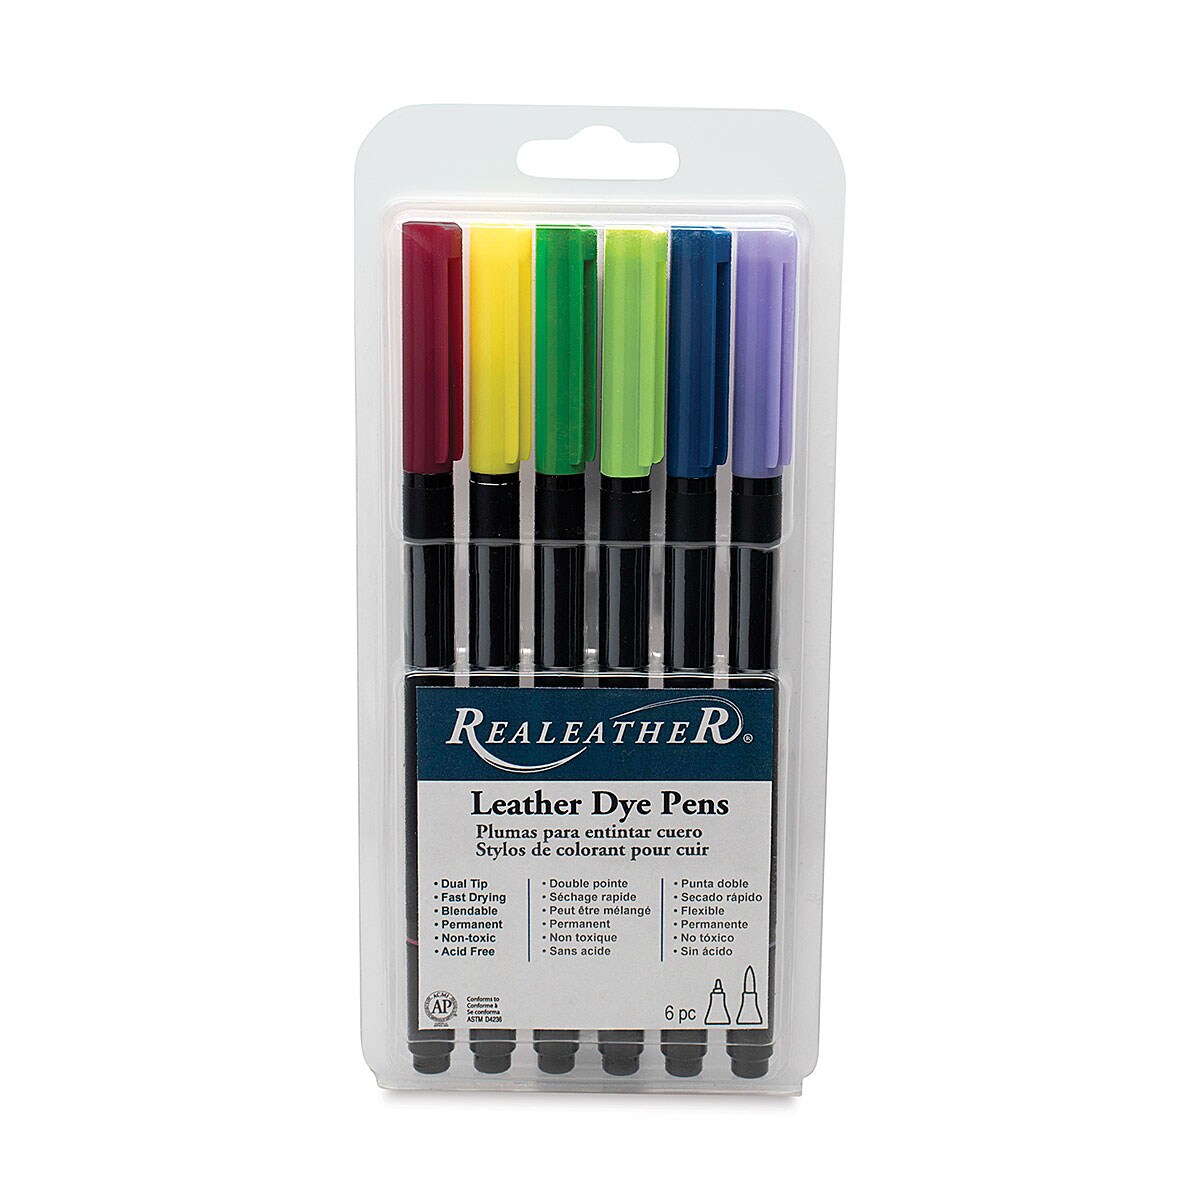 Realeather Leather Dye Pens - Landscape Colors, Set of 6